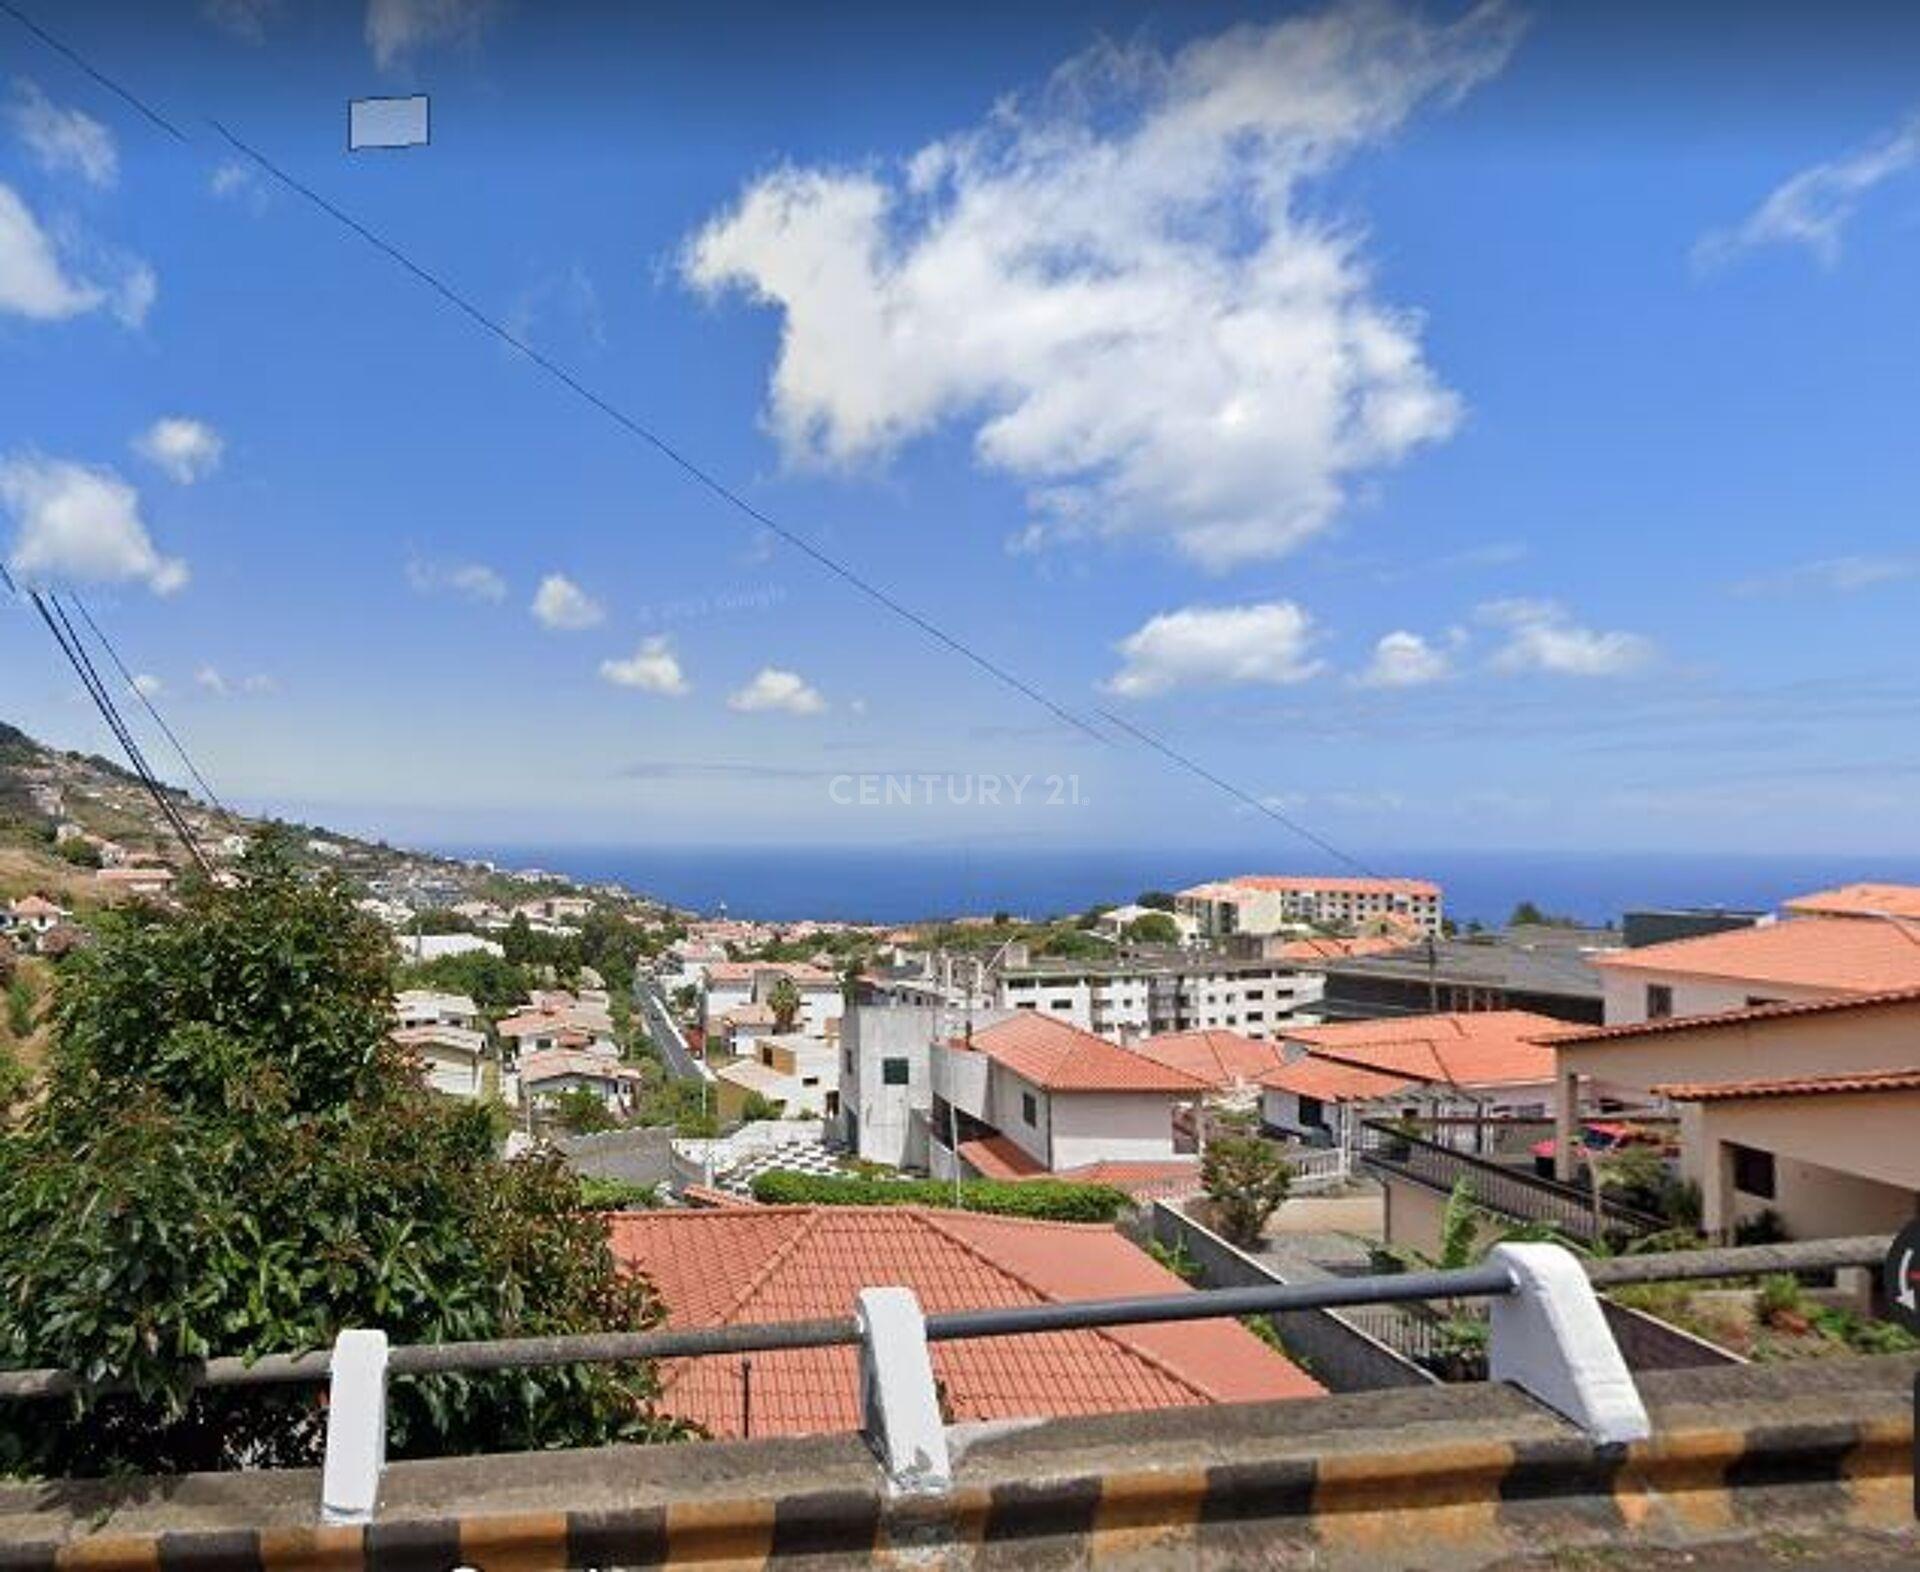 Appartement met één slaapkamer - Verhuurd - Caniço, Santa Cruz - Madeira